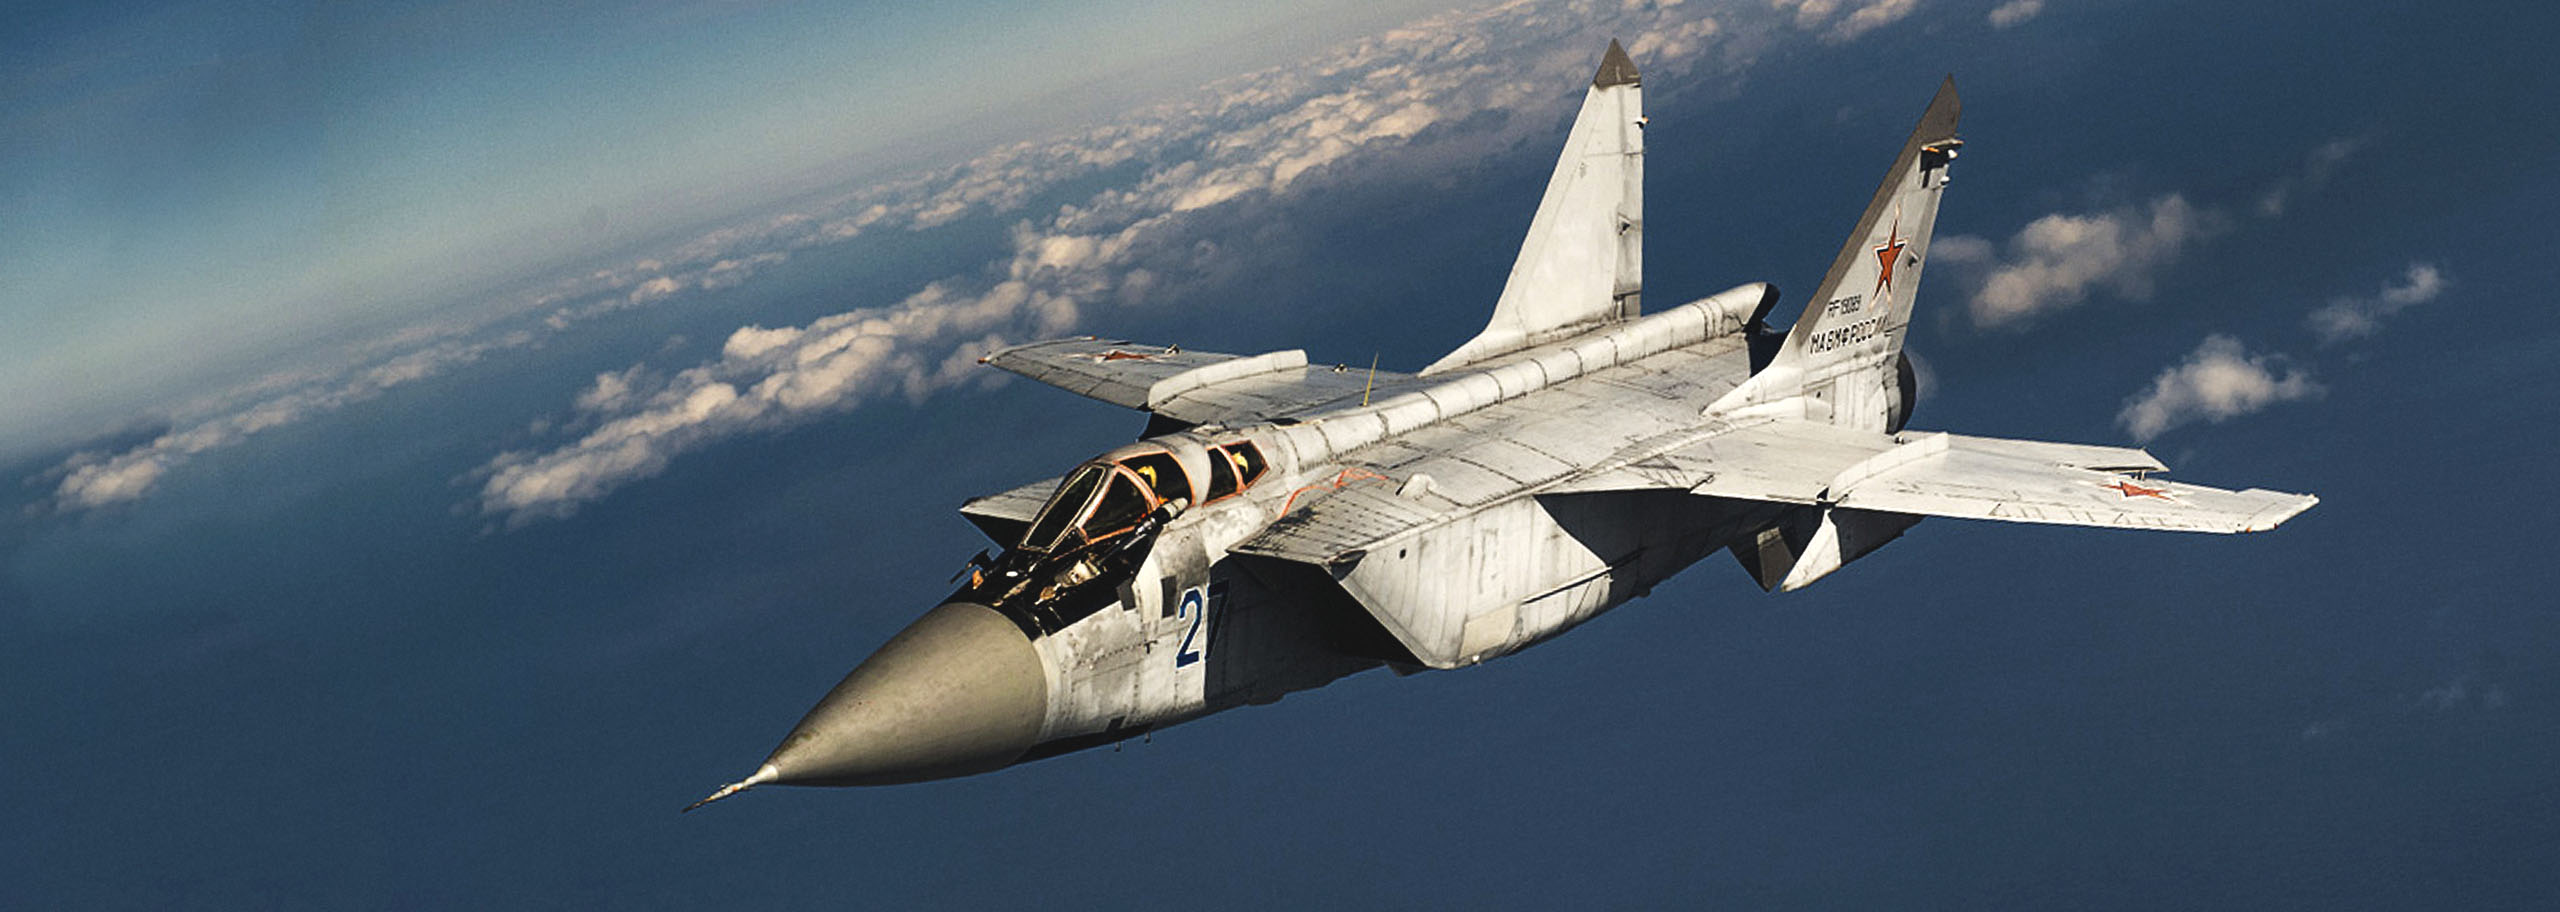 MiG-31: Το αεροσκάφος αναχαίτισης της ρωσικής Αεροπορίας με τις «διαστημικές» επιδόσεις